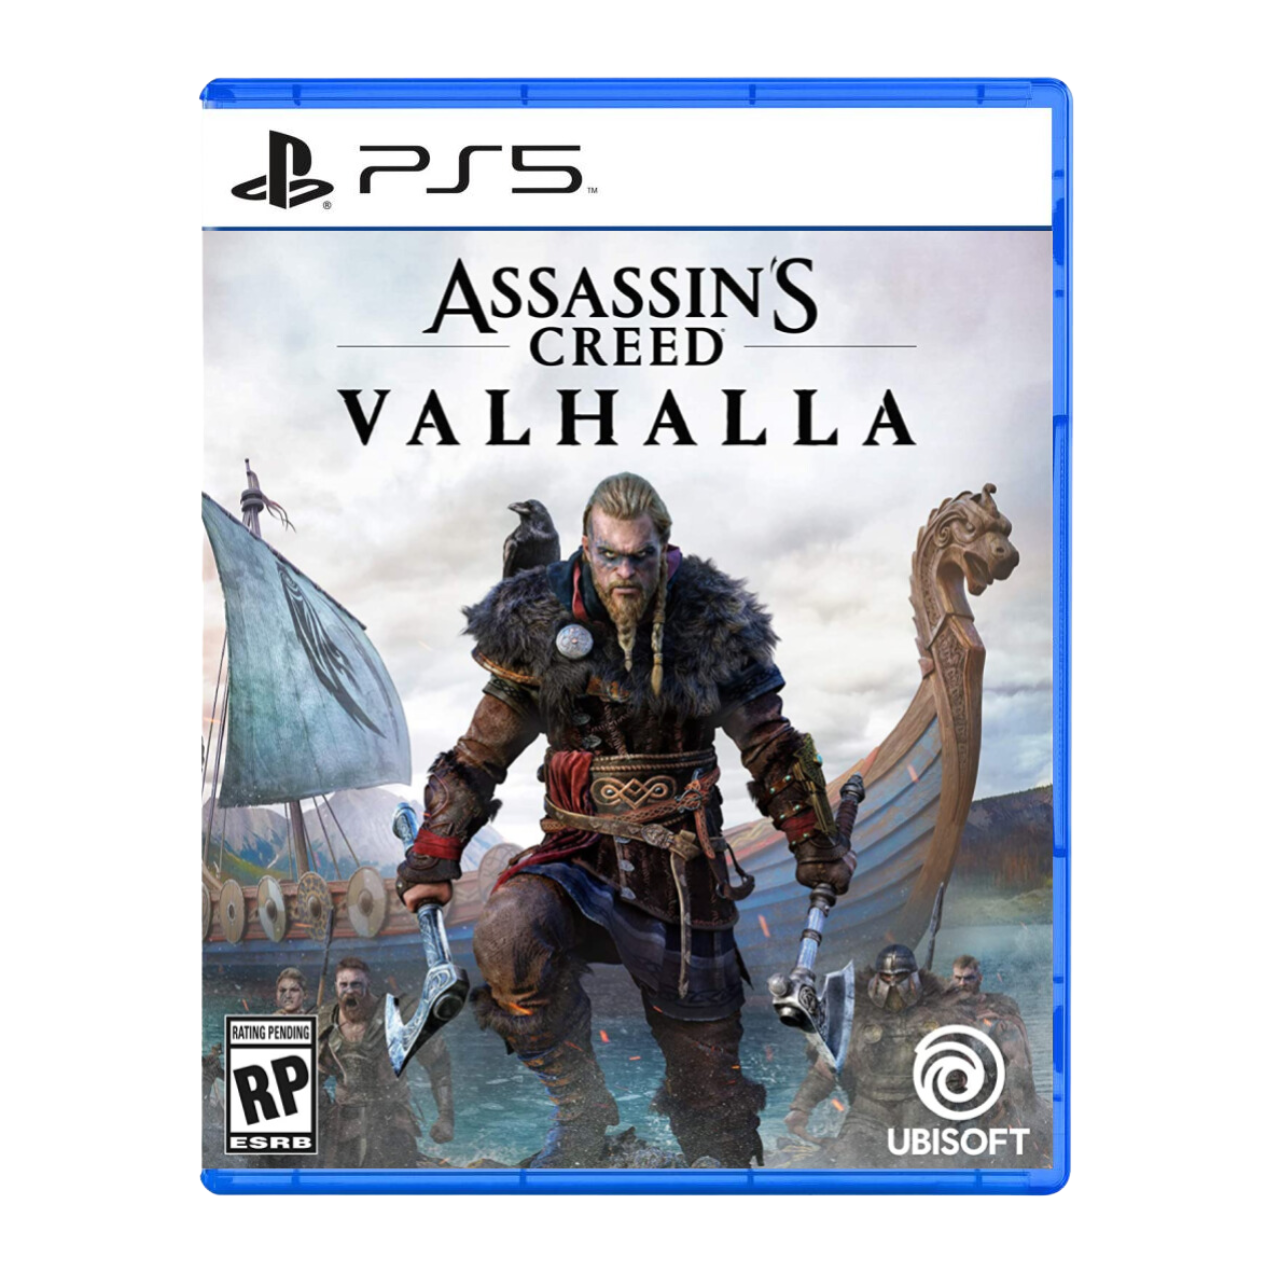 Assassin's Creed Origins: The Hidden Ones DLC (PC, 2018) – Pixel Hunted